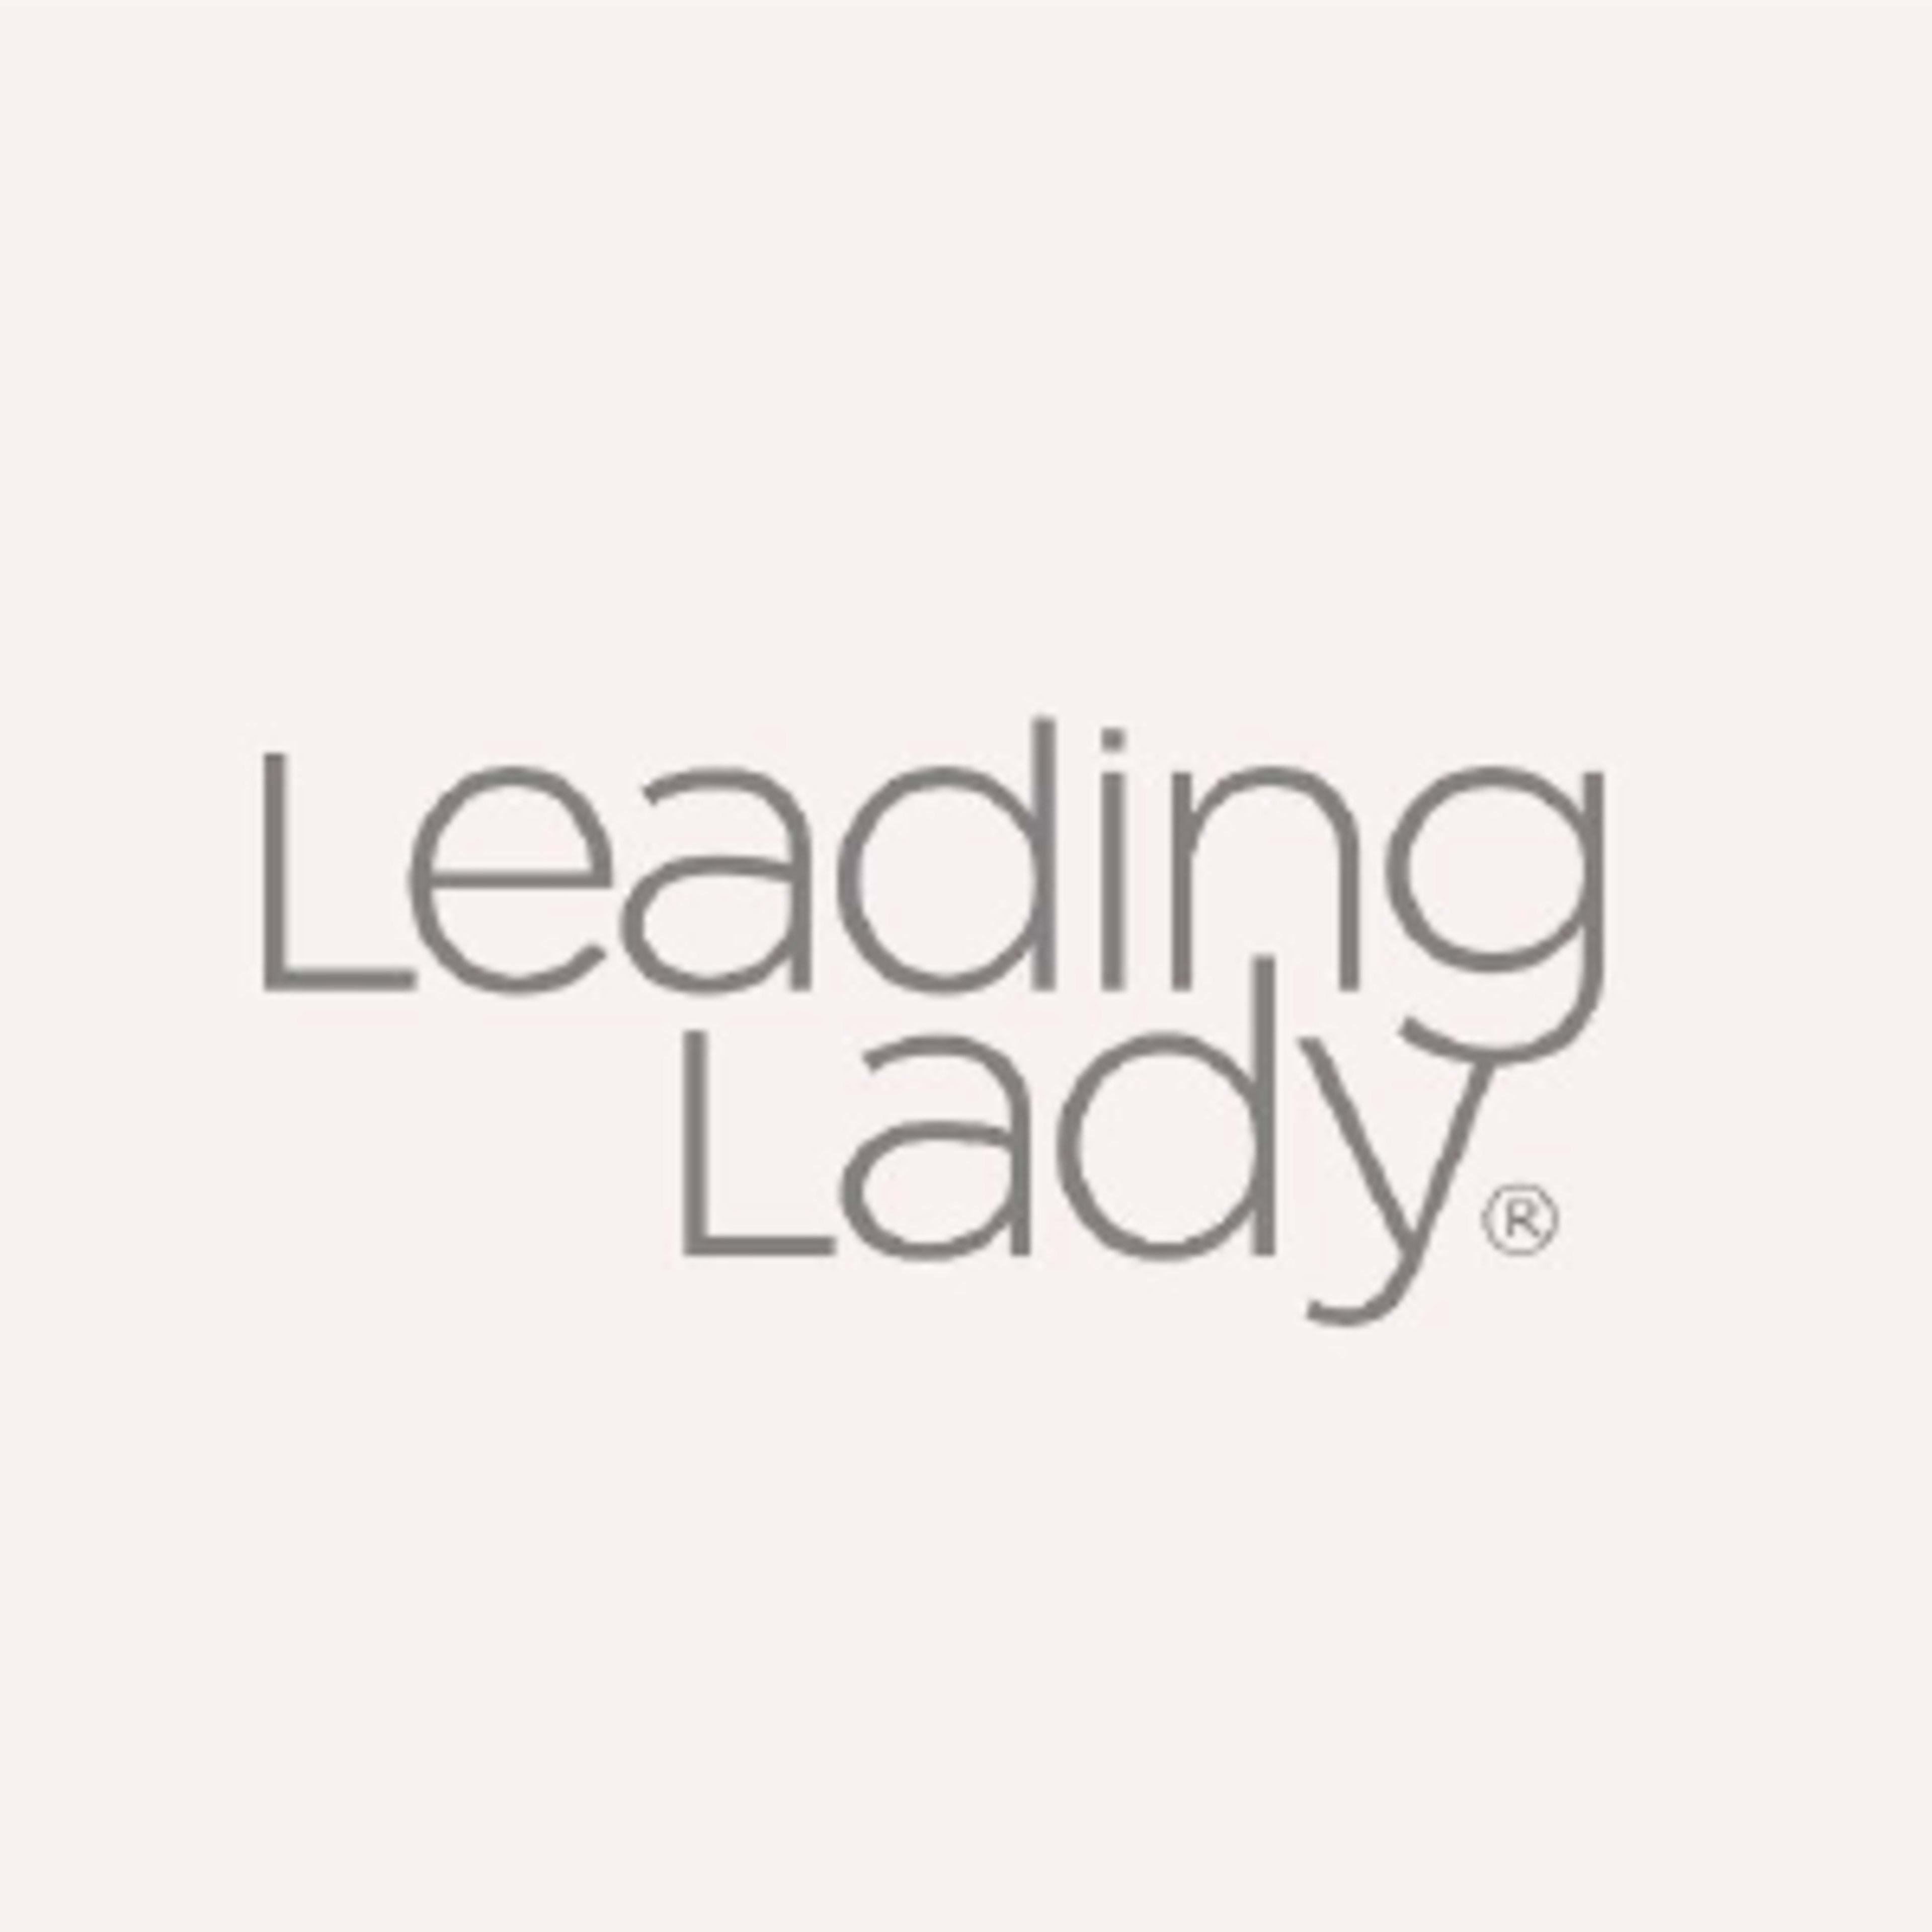 Leading Lady Code